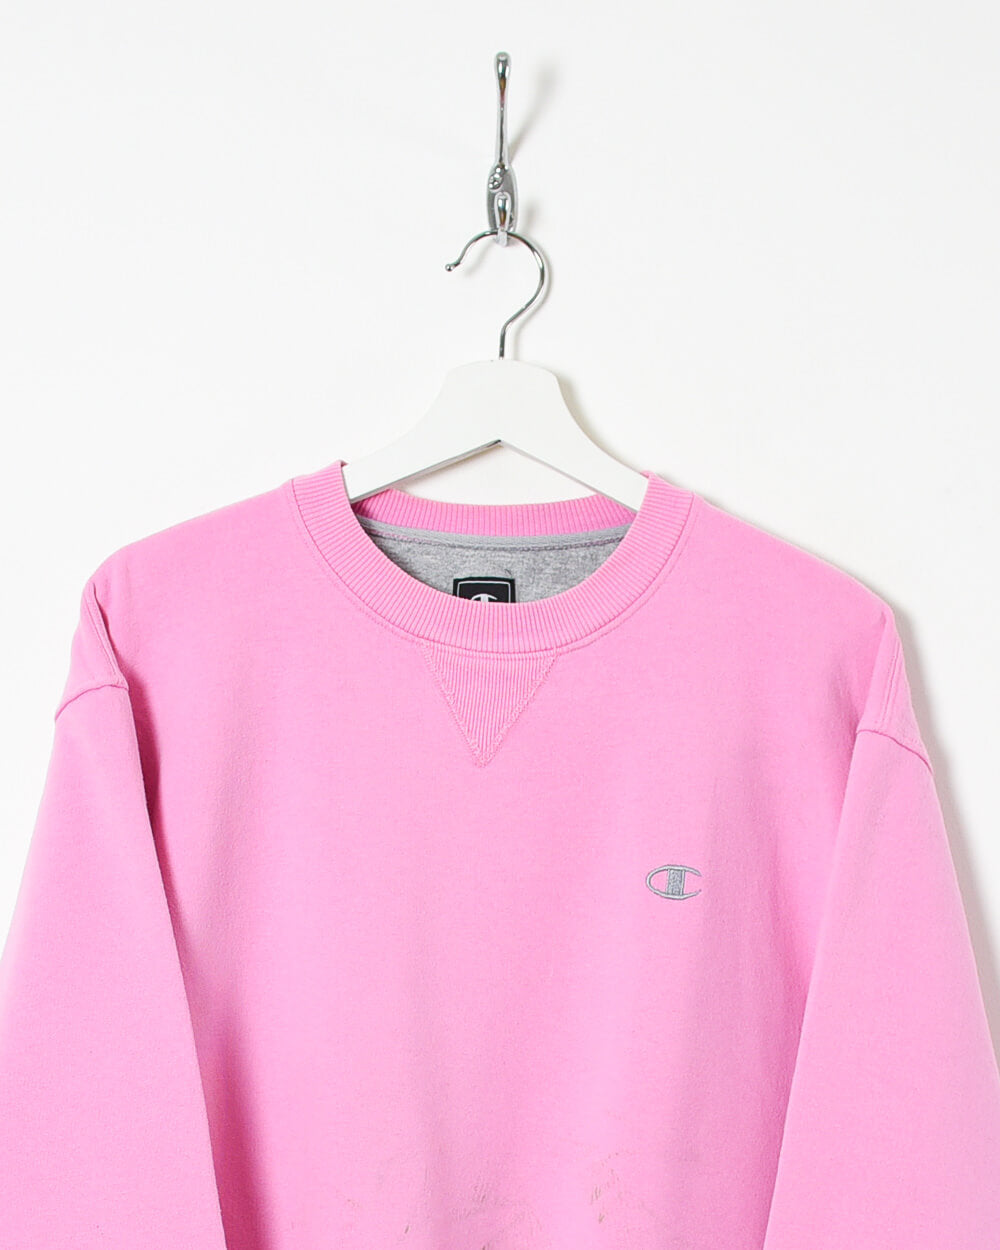 Champion Sweatshirt - Medium - Domno Vintage 90s, 80s, 00s Retro and Vintage Clothing 